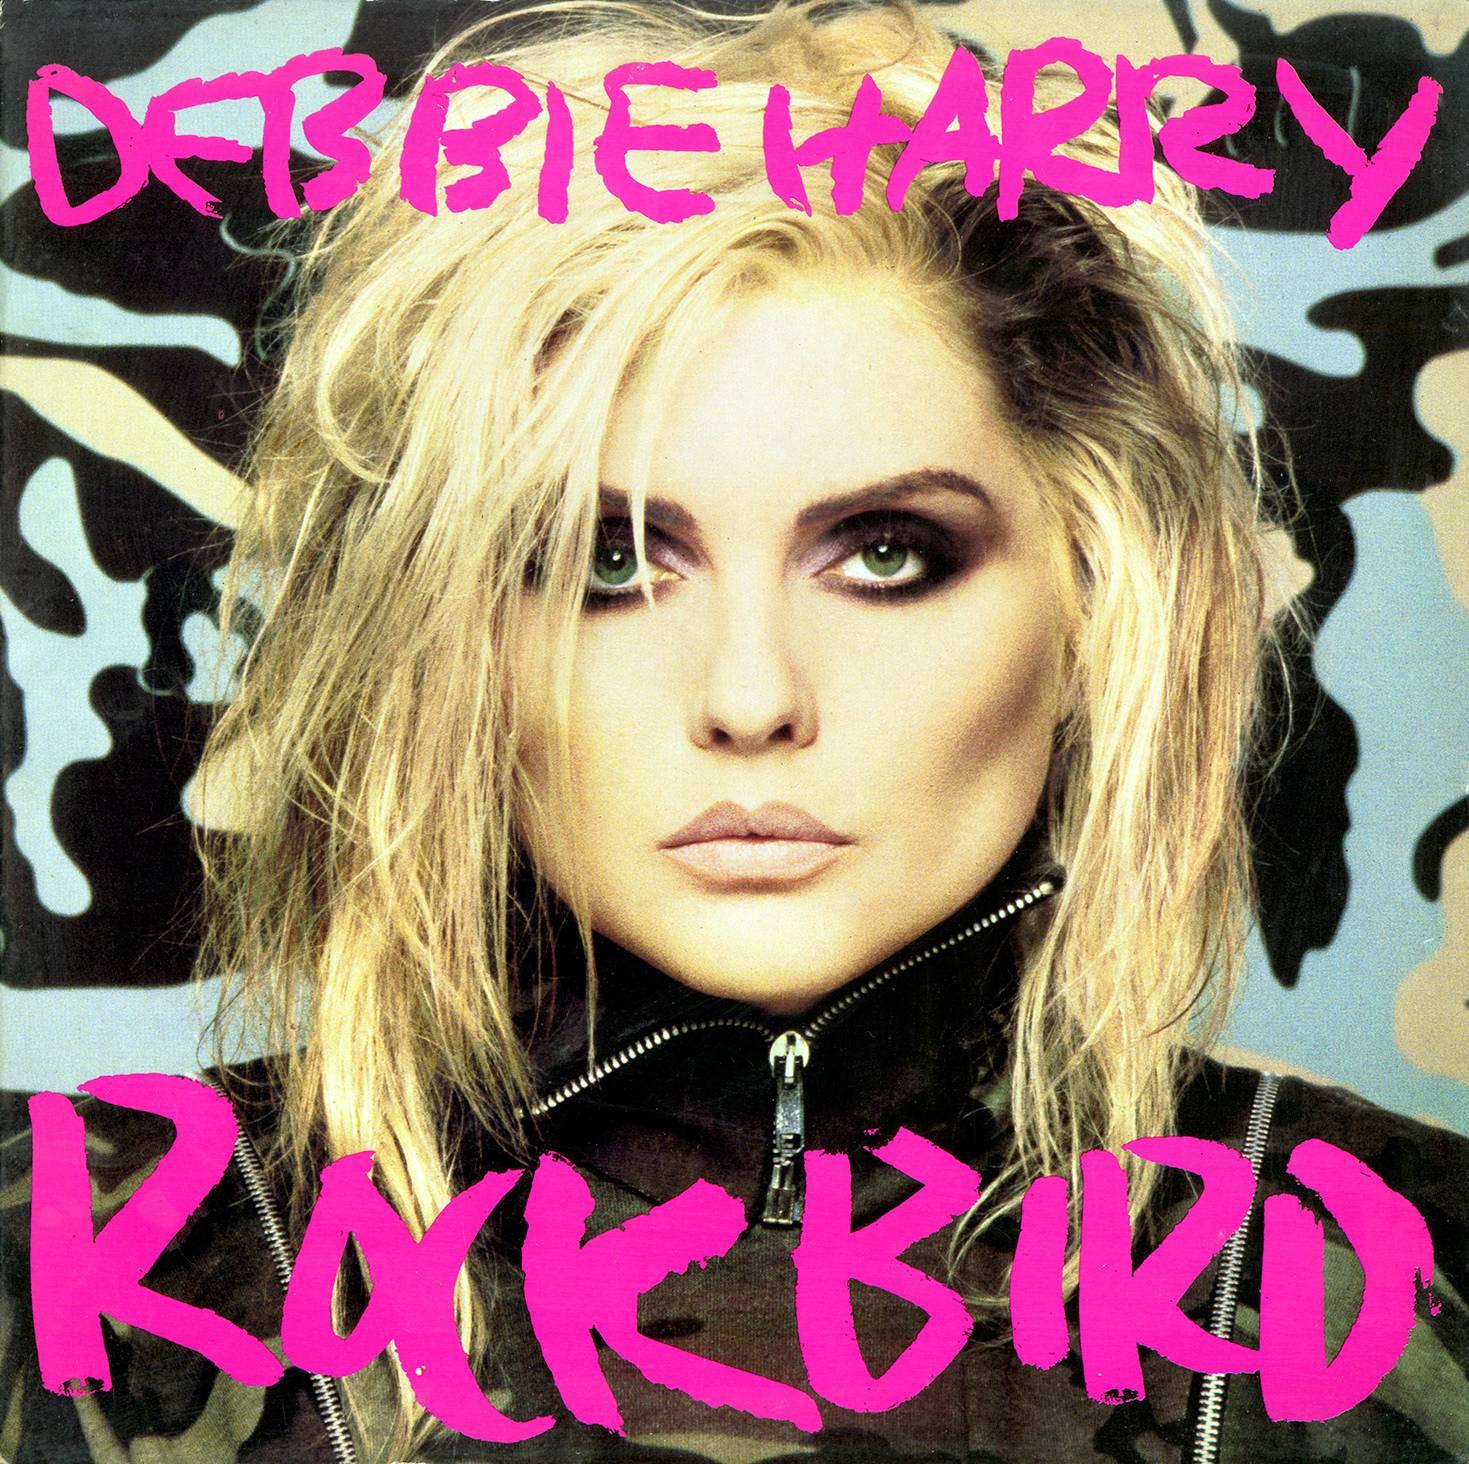 Rockbird Debbie Harry Album Cover - Print by Andy Warhol